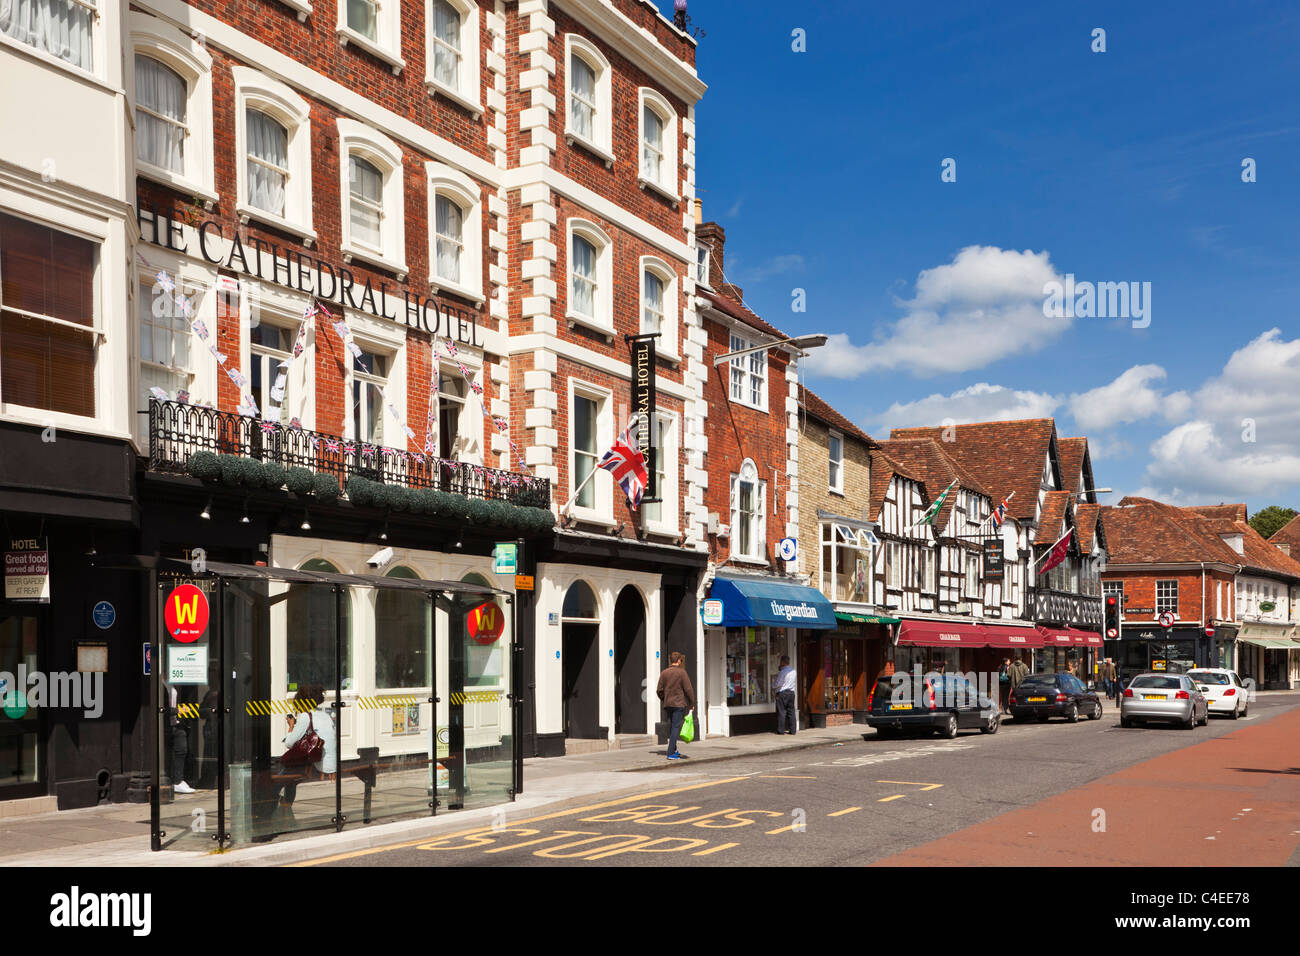 Cathedral Hotel and shops, Salisbury, Wiltshire, England UK Stock Photo